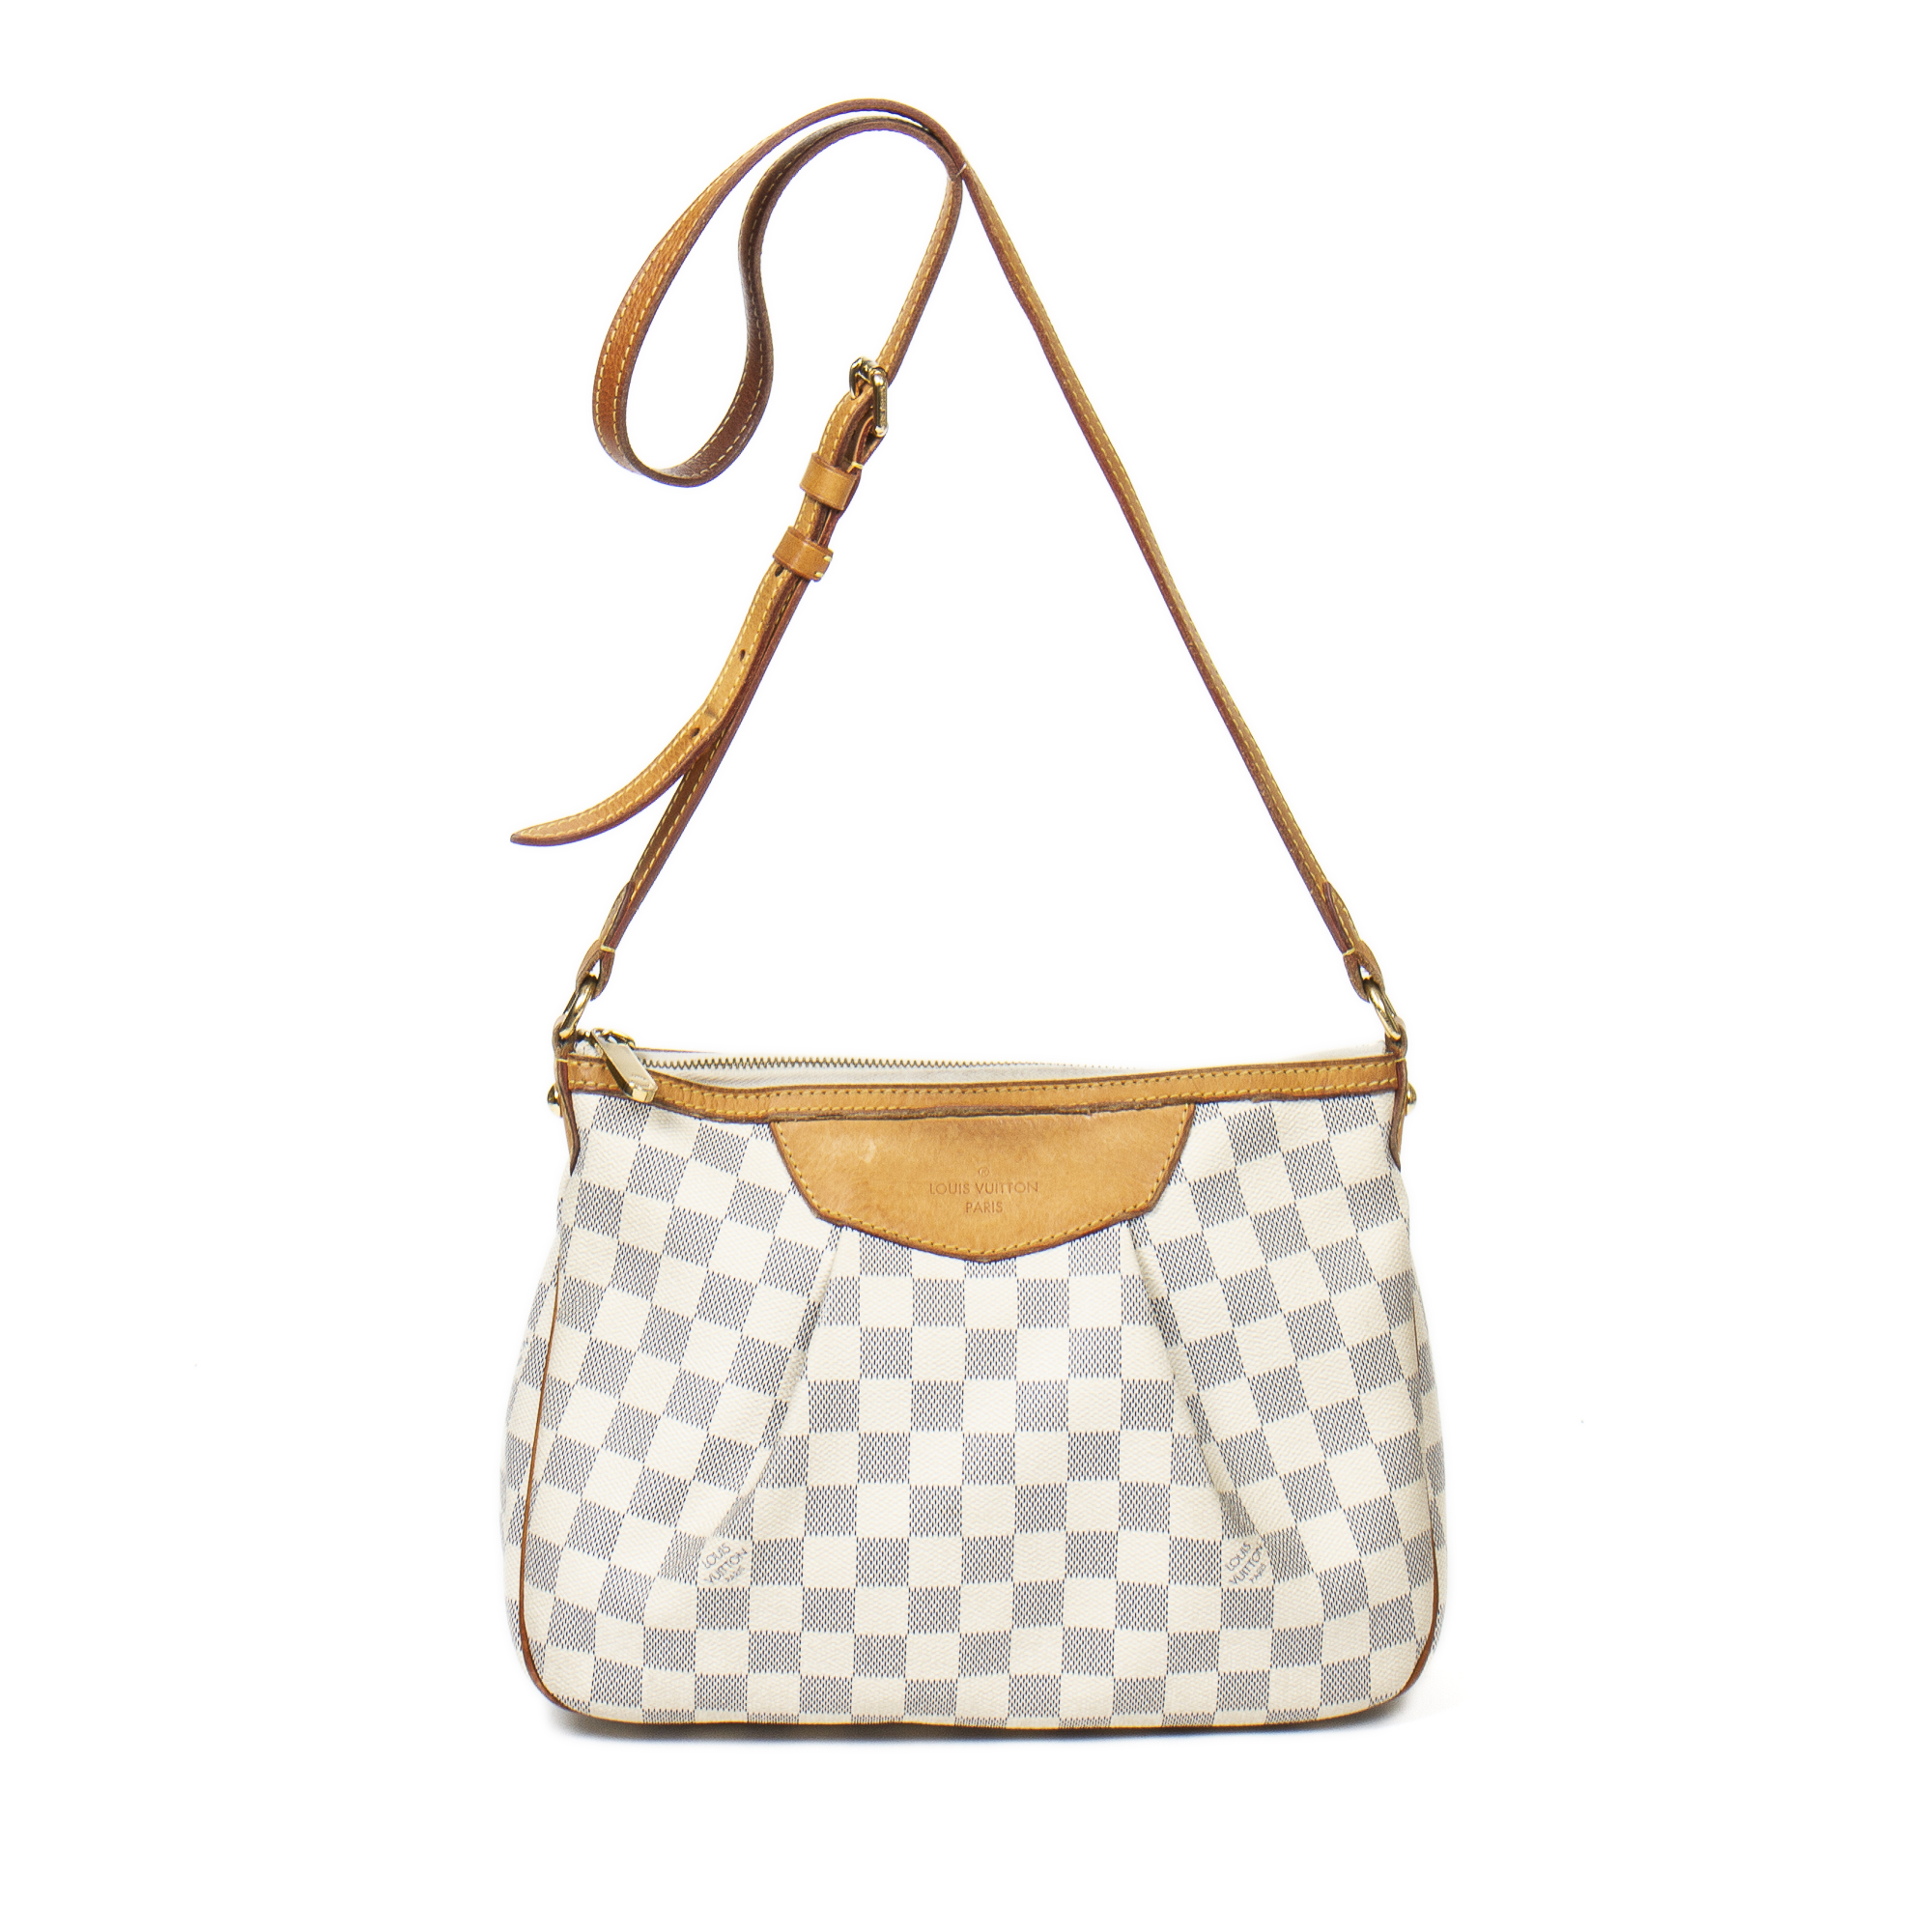 Louis Vuitton Siracusa PM Damier Azur Crossbody Bag on SALE